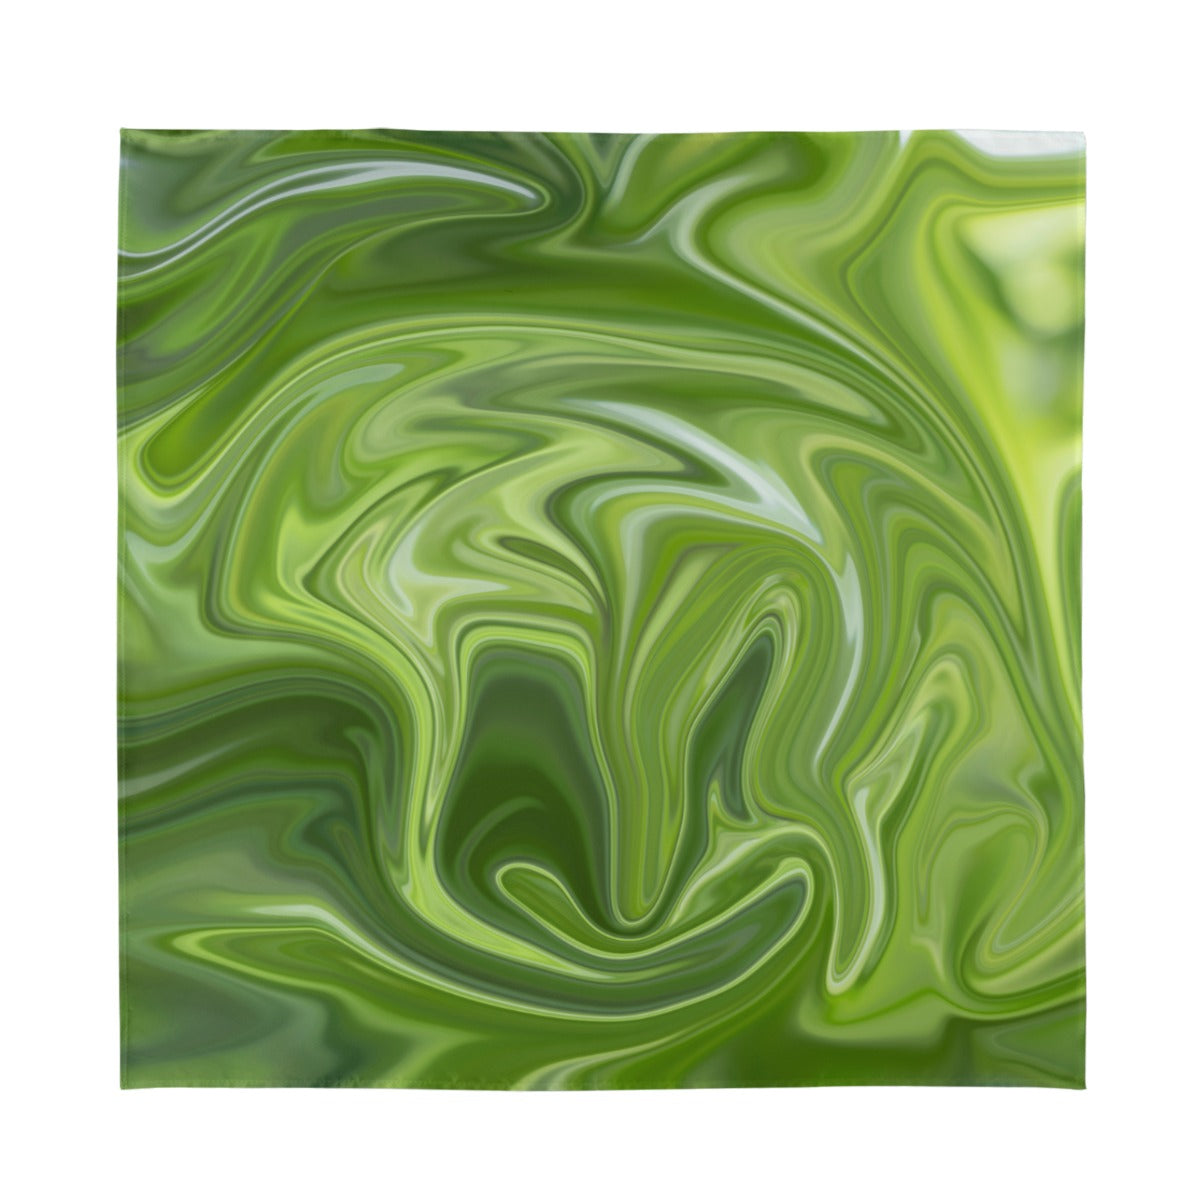 Head Scarf / Bandana green waves